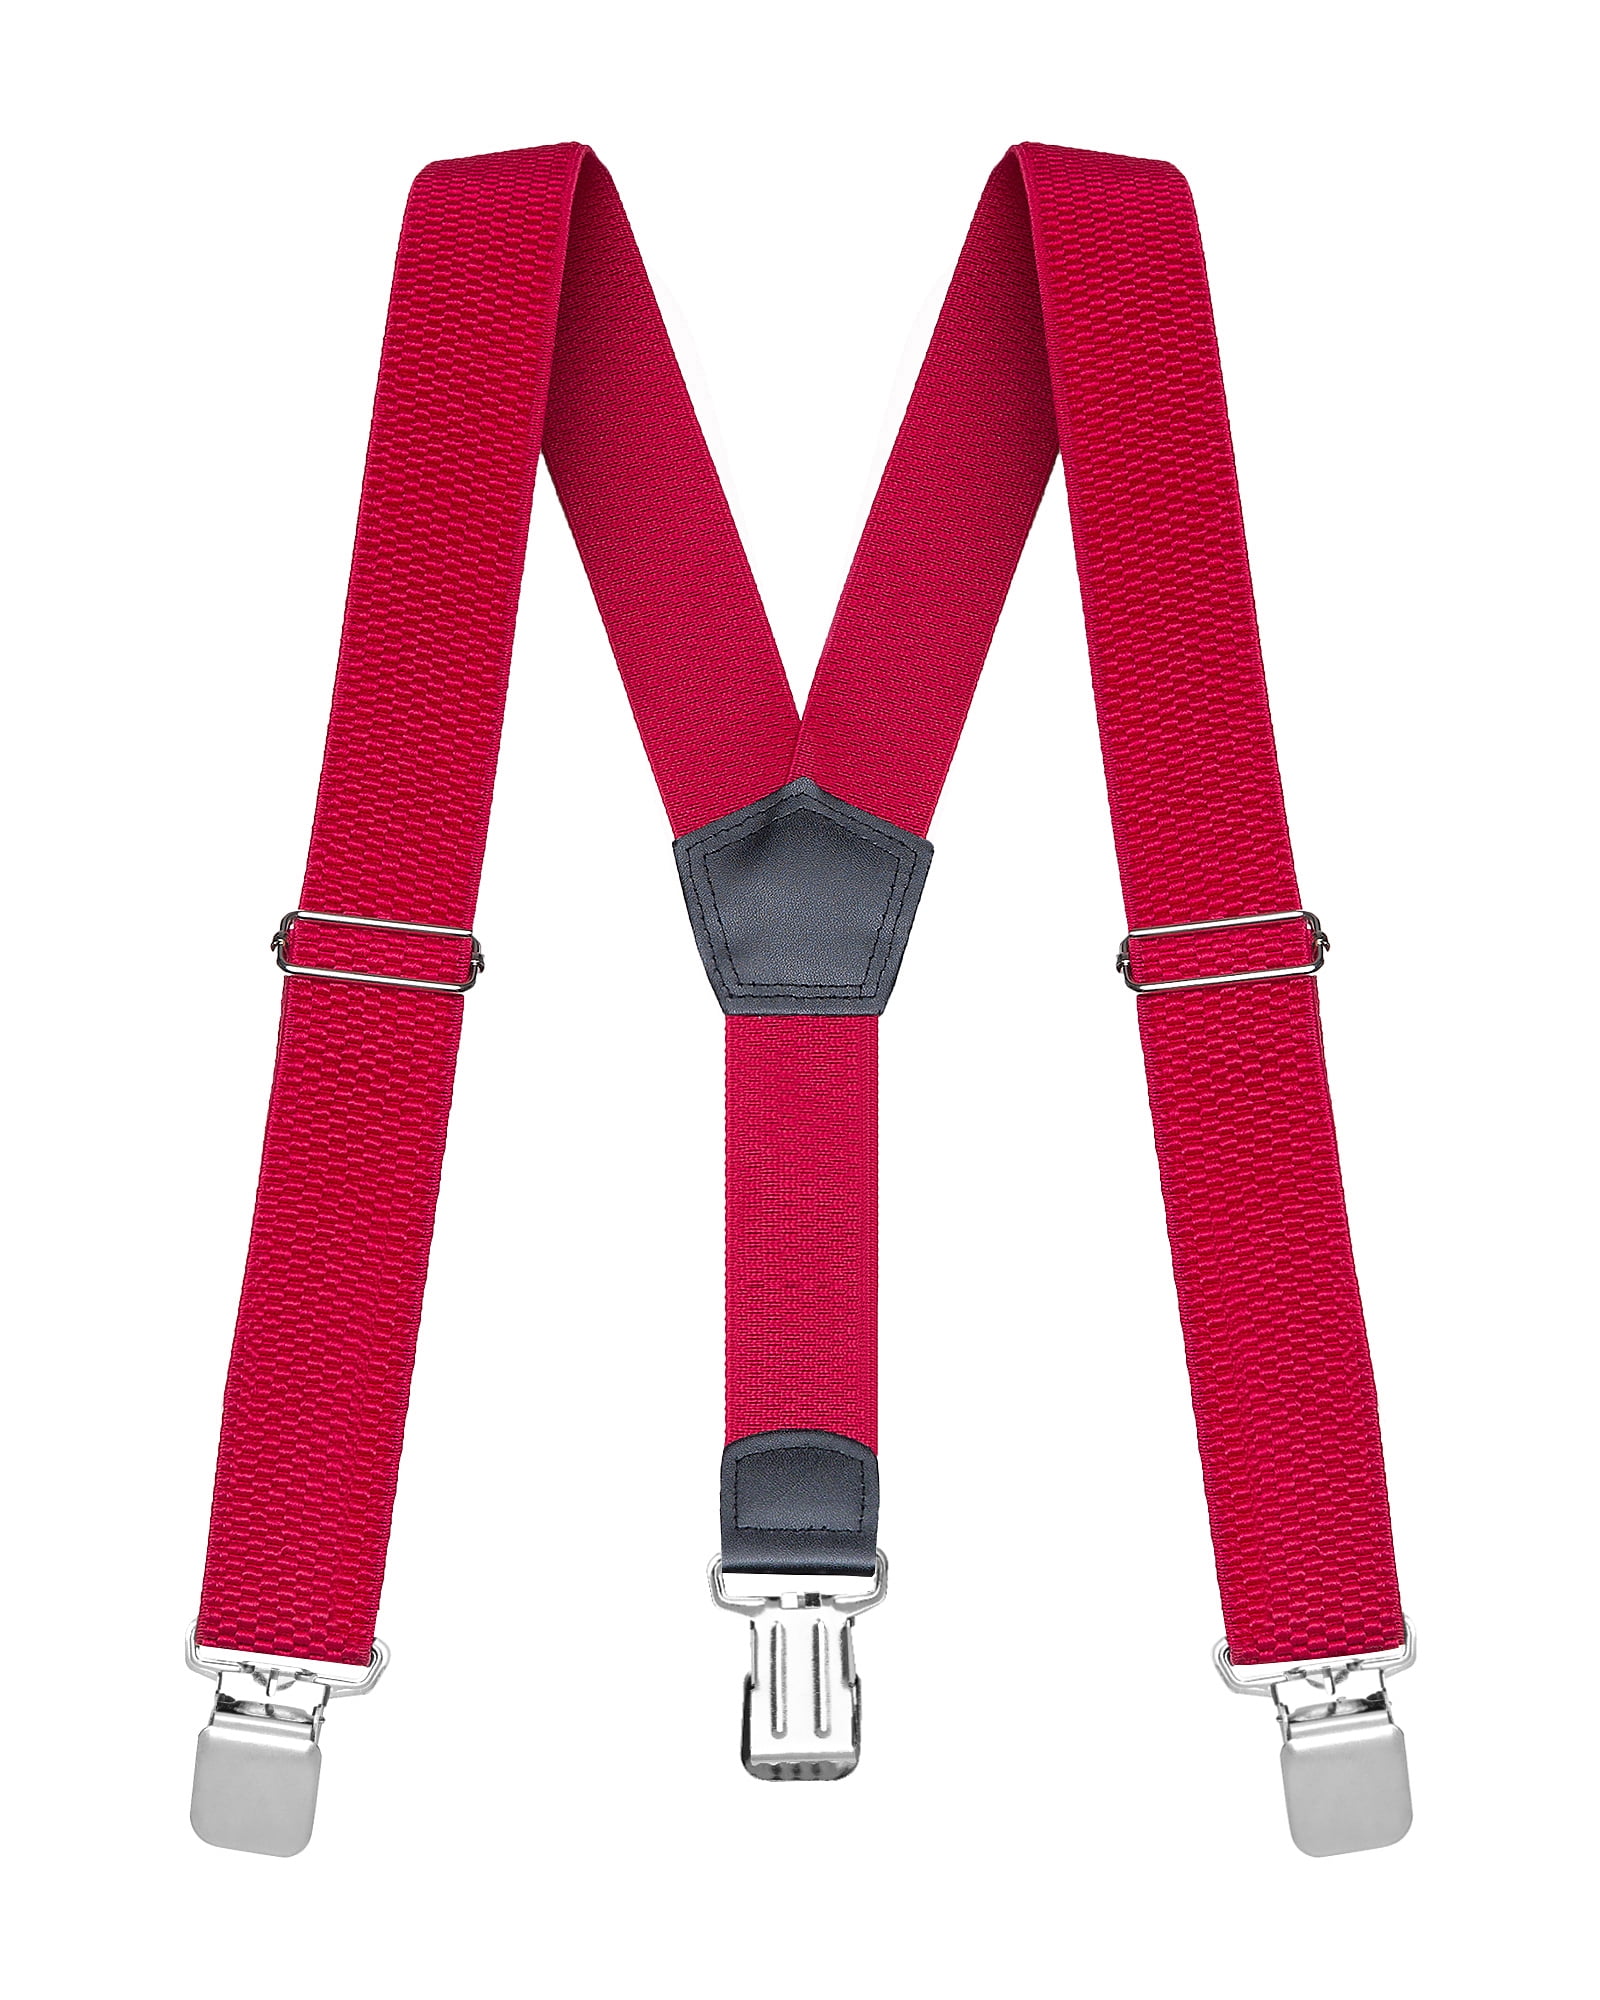 Buyless Fashion Leather End Suspenders for Men 48 Elastic Adjustable Straps 1 1/4 Y Shape